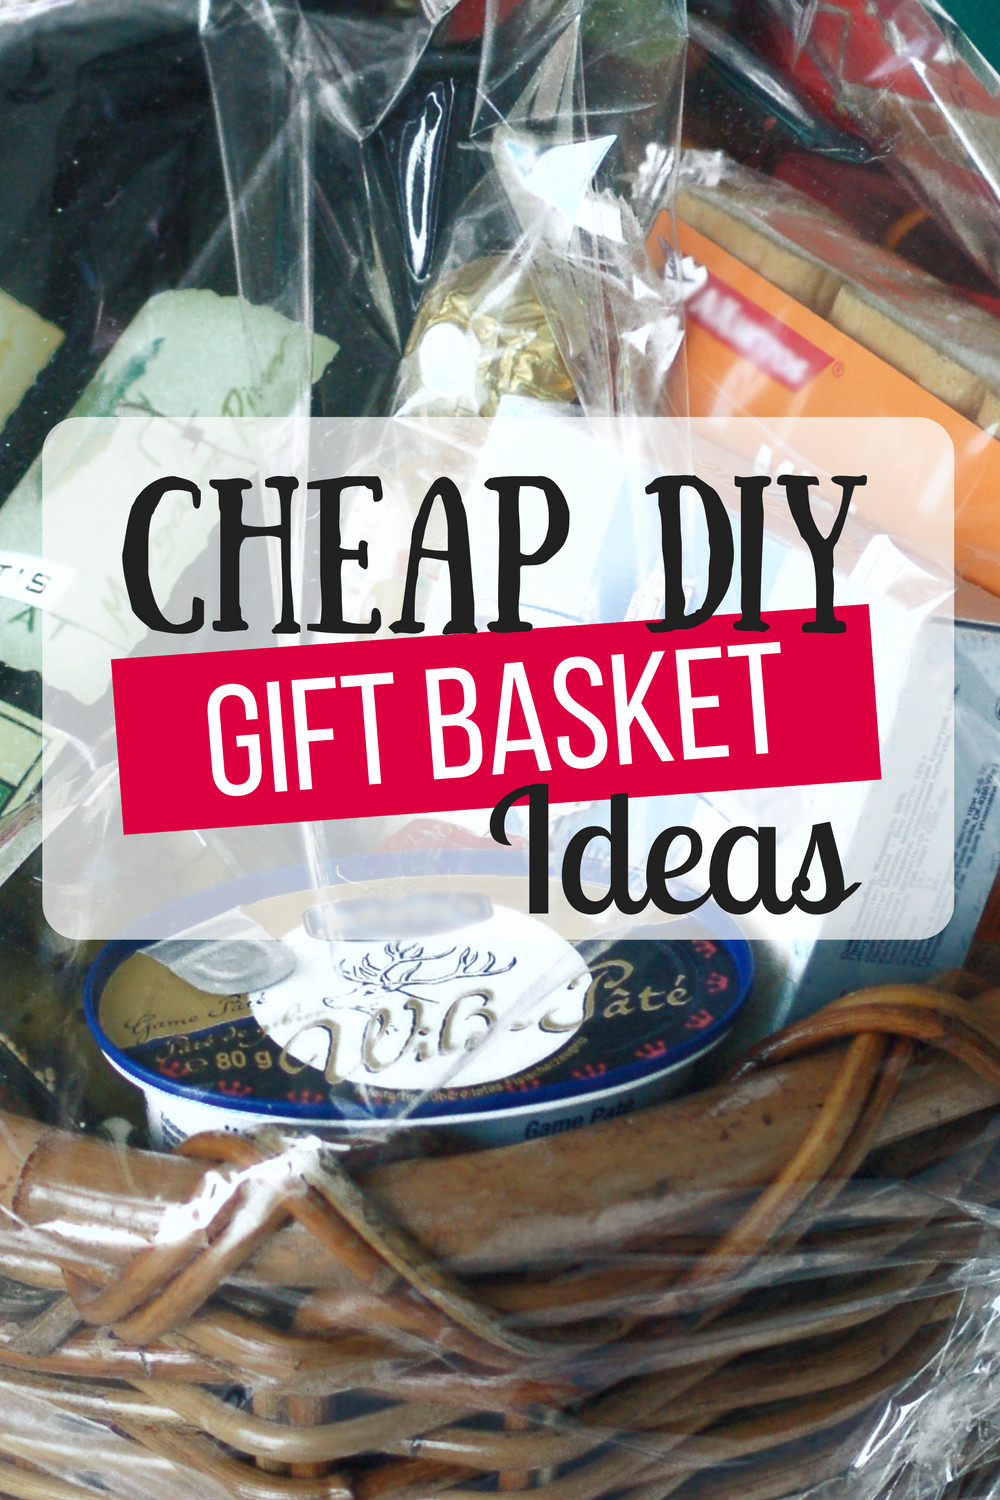 Cheap Gift Basket Ideas
 Cheap DIY Gift Baskets The Busy Bud er